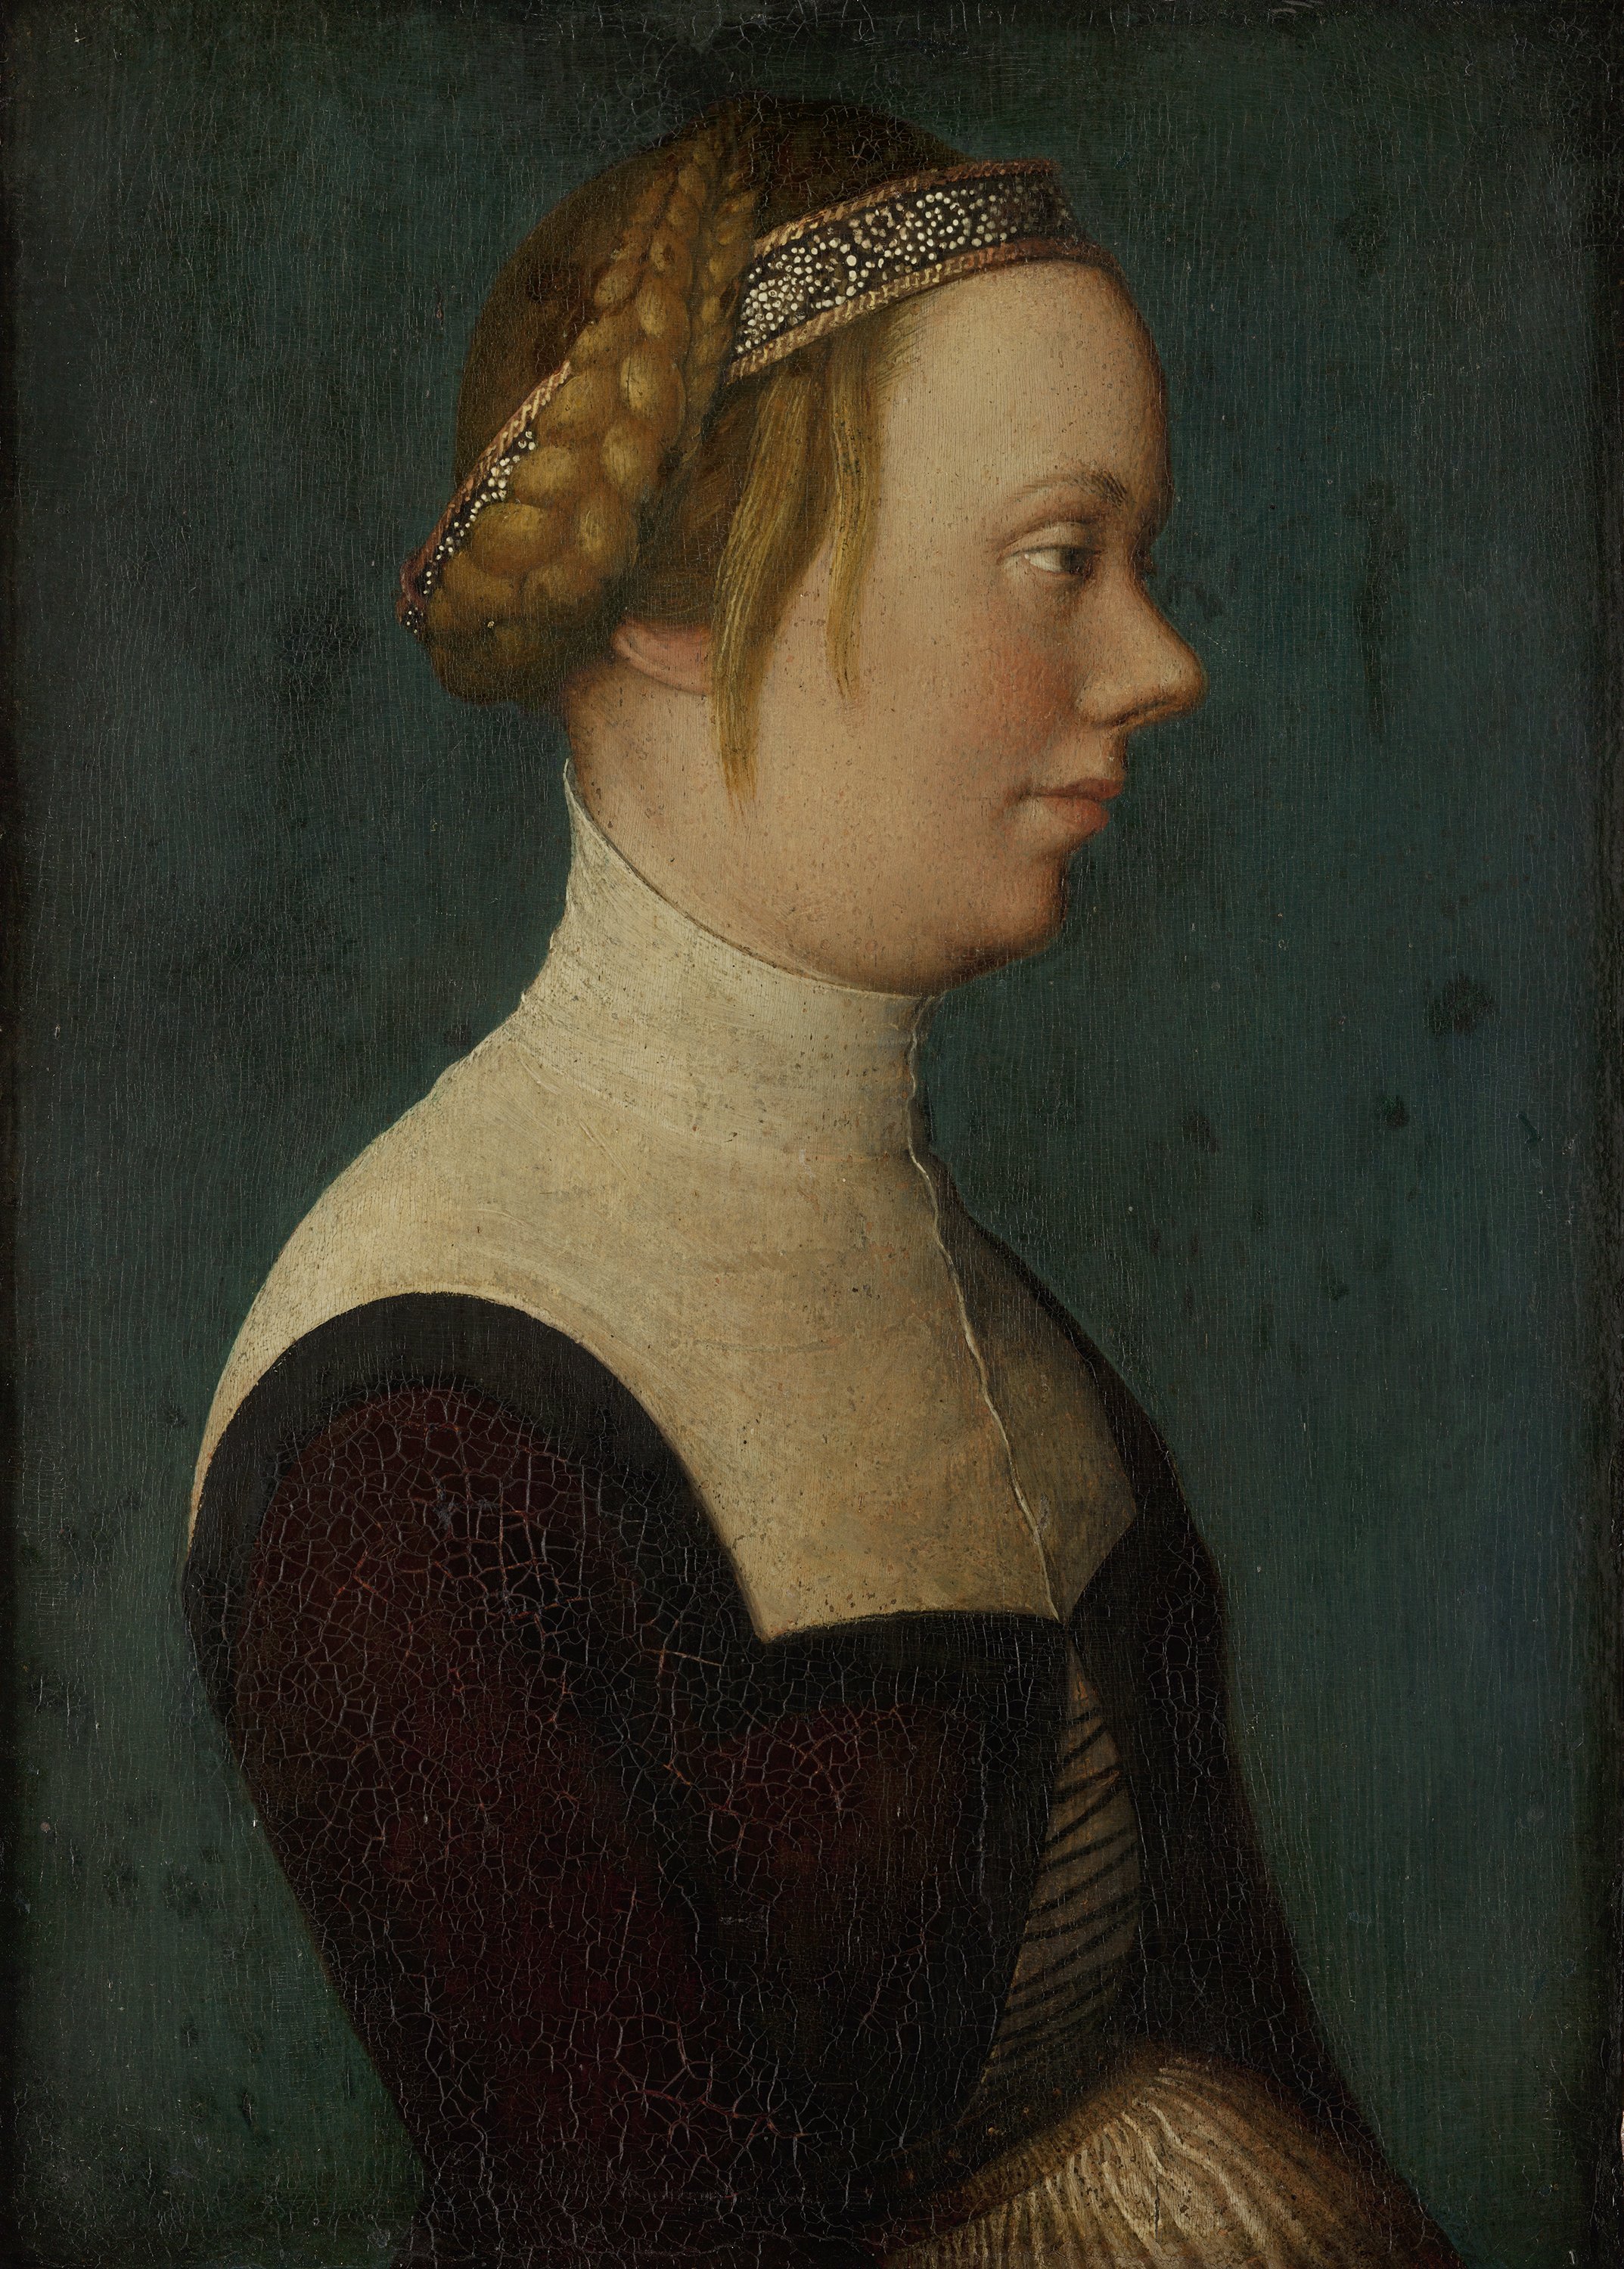 Portrait of a Woman. Retrato de una mujer, c. 1518-1520